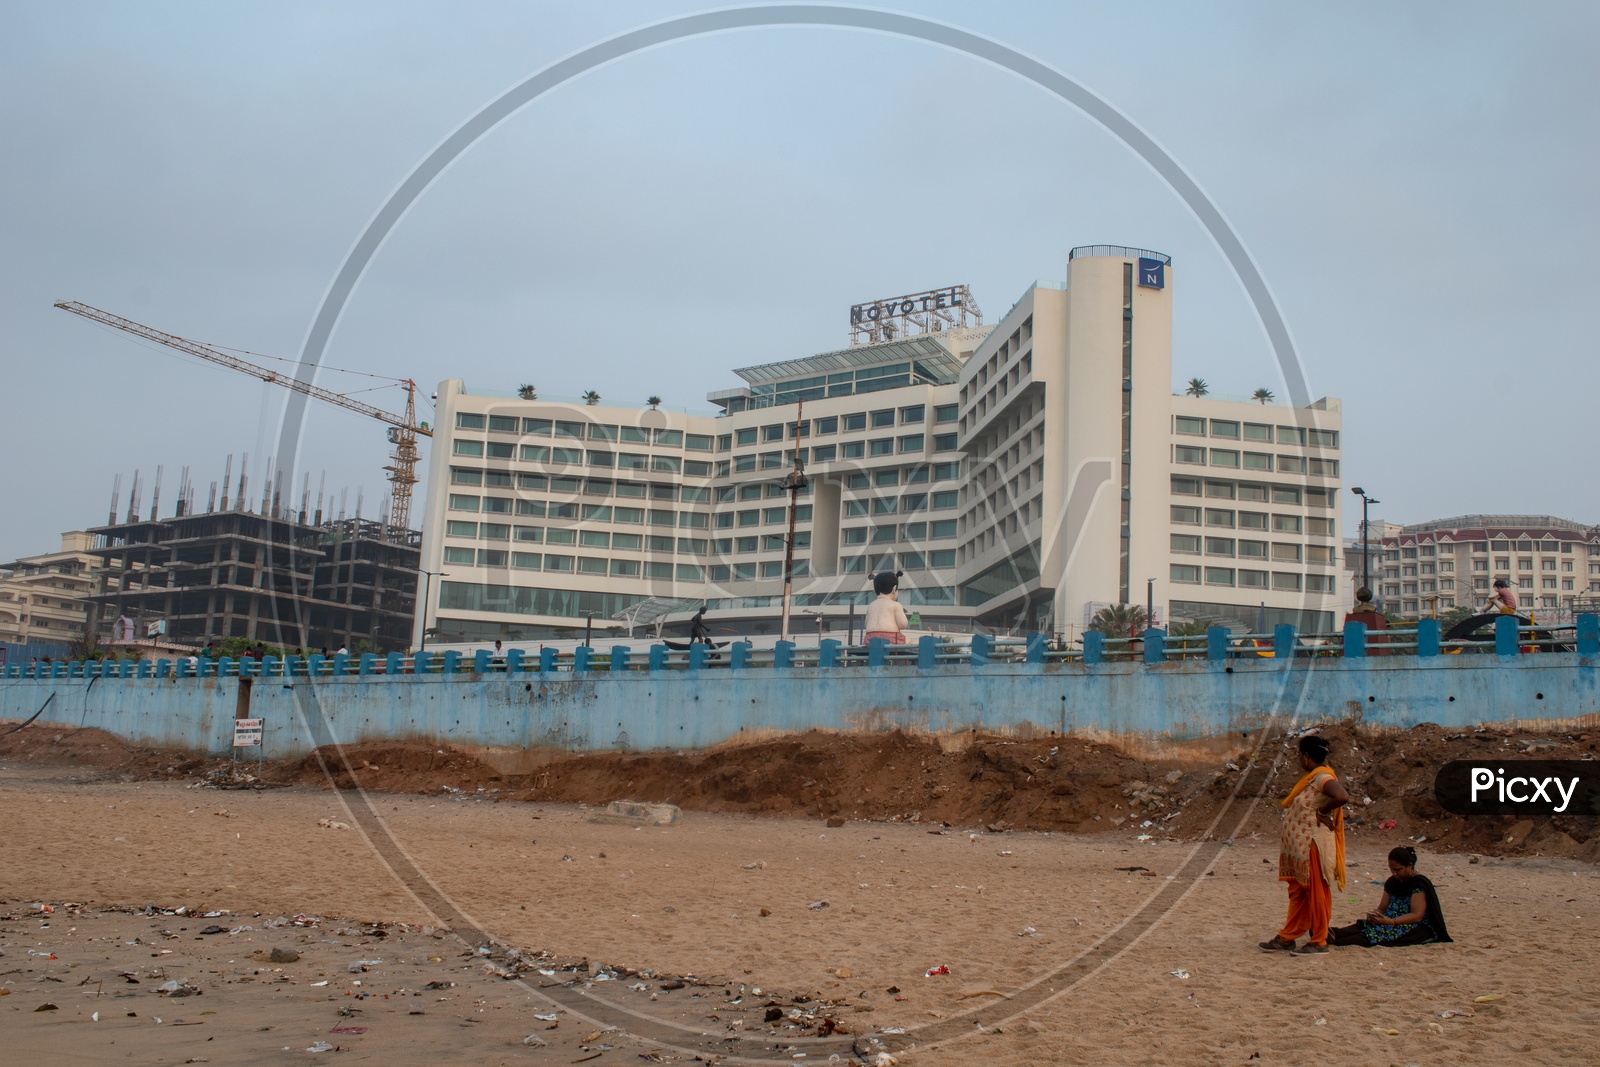 Novotel hotel view from Rama Krishna beach (R.K.Beach), Vishakapatnam/Vizag.